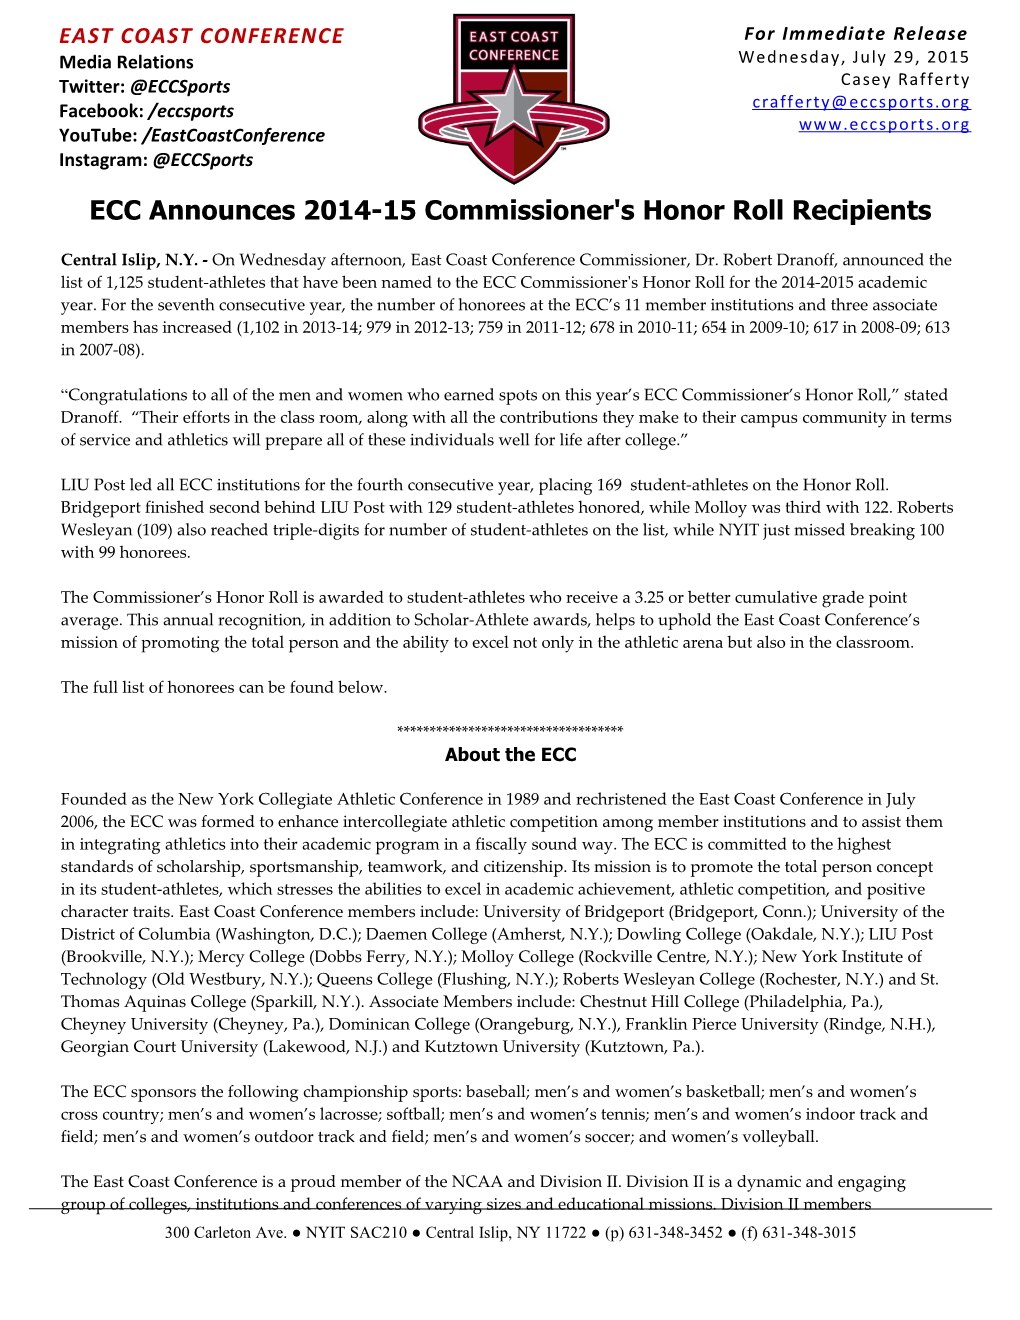 ECC Announces 2014-15 Commissioner's Honor Roll Recipients